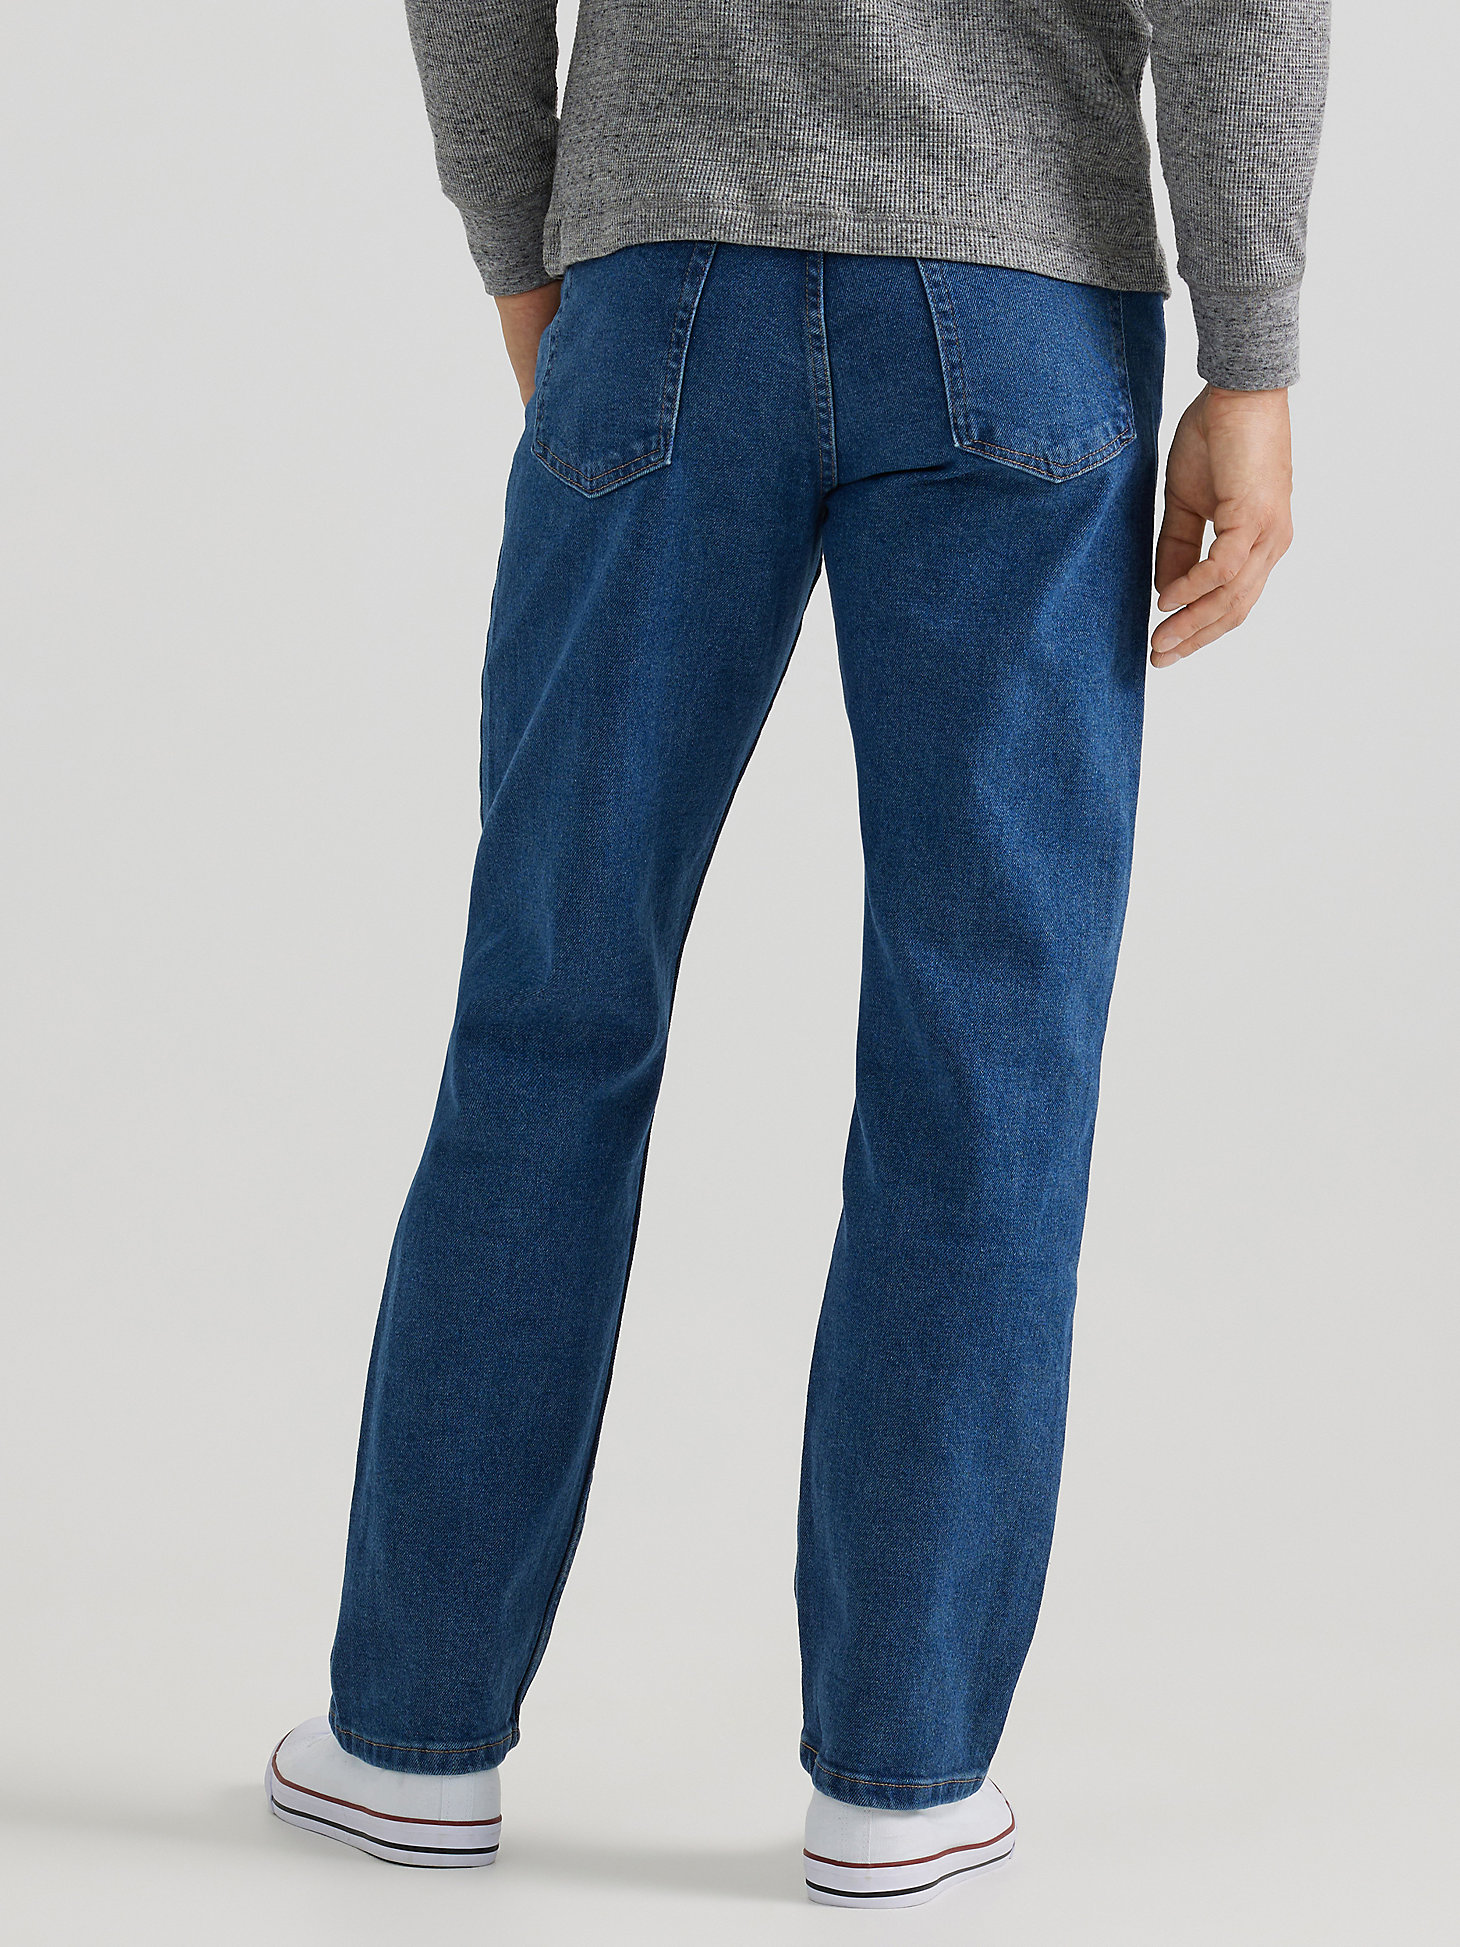 Wrangler® Five Star Premium Denim Flex for Comfort Relaxed Fit Jean in Stone alternative view 1